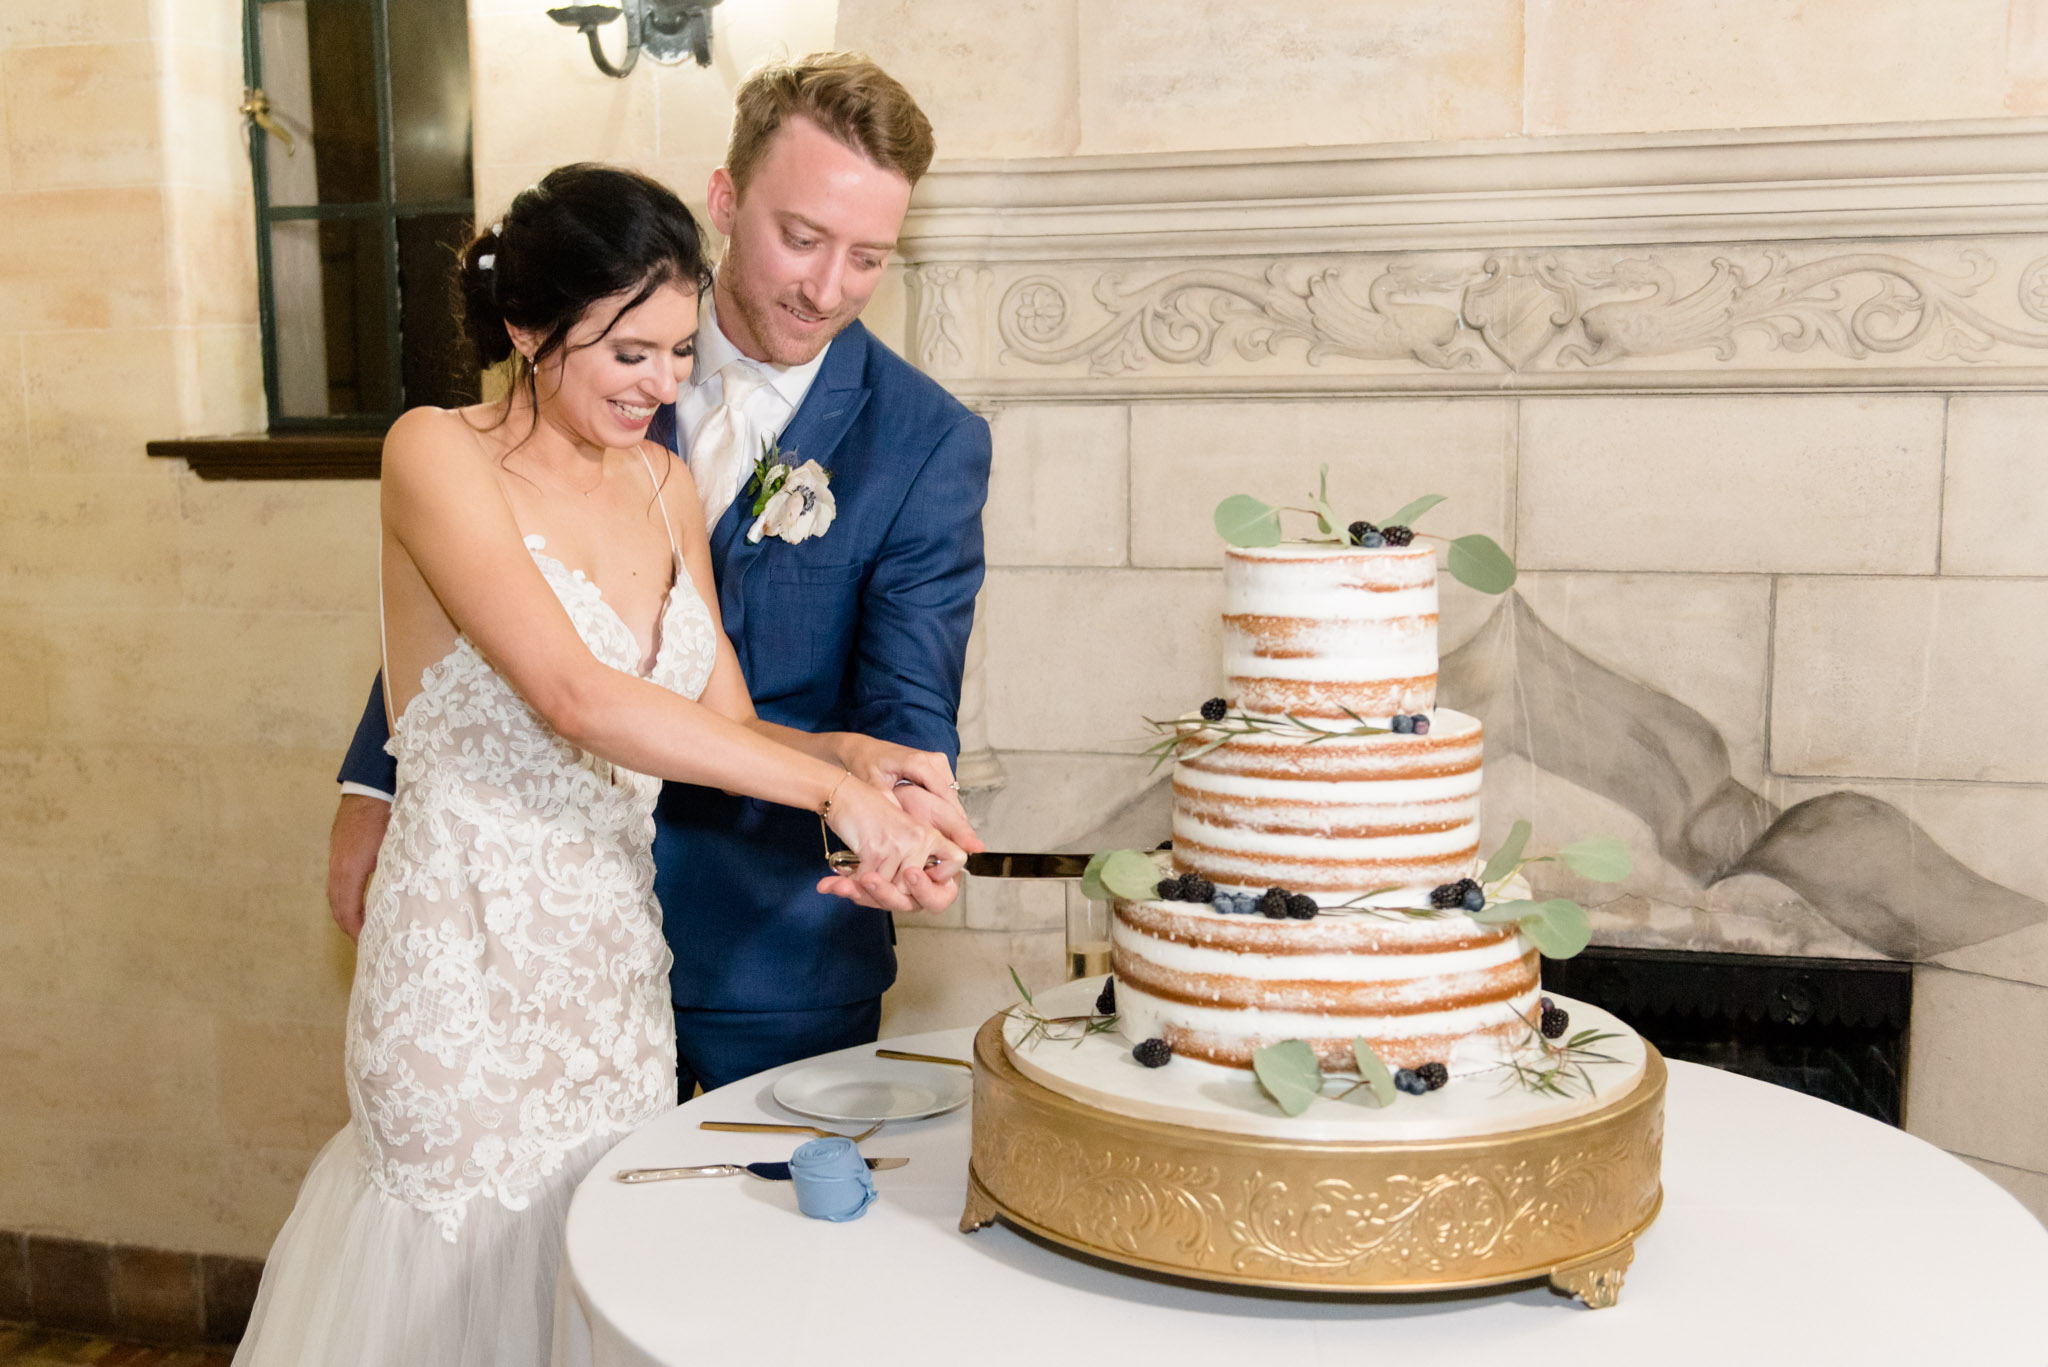 Couple cuts cake at wedding.